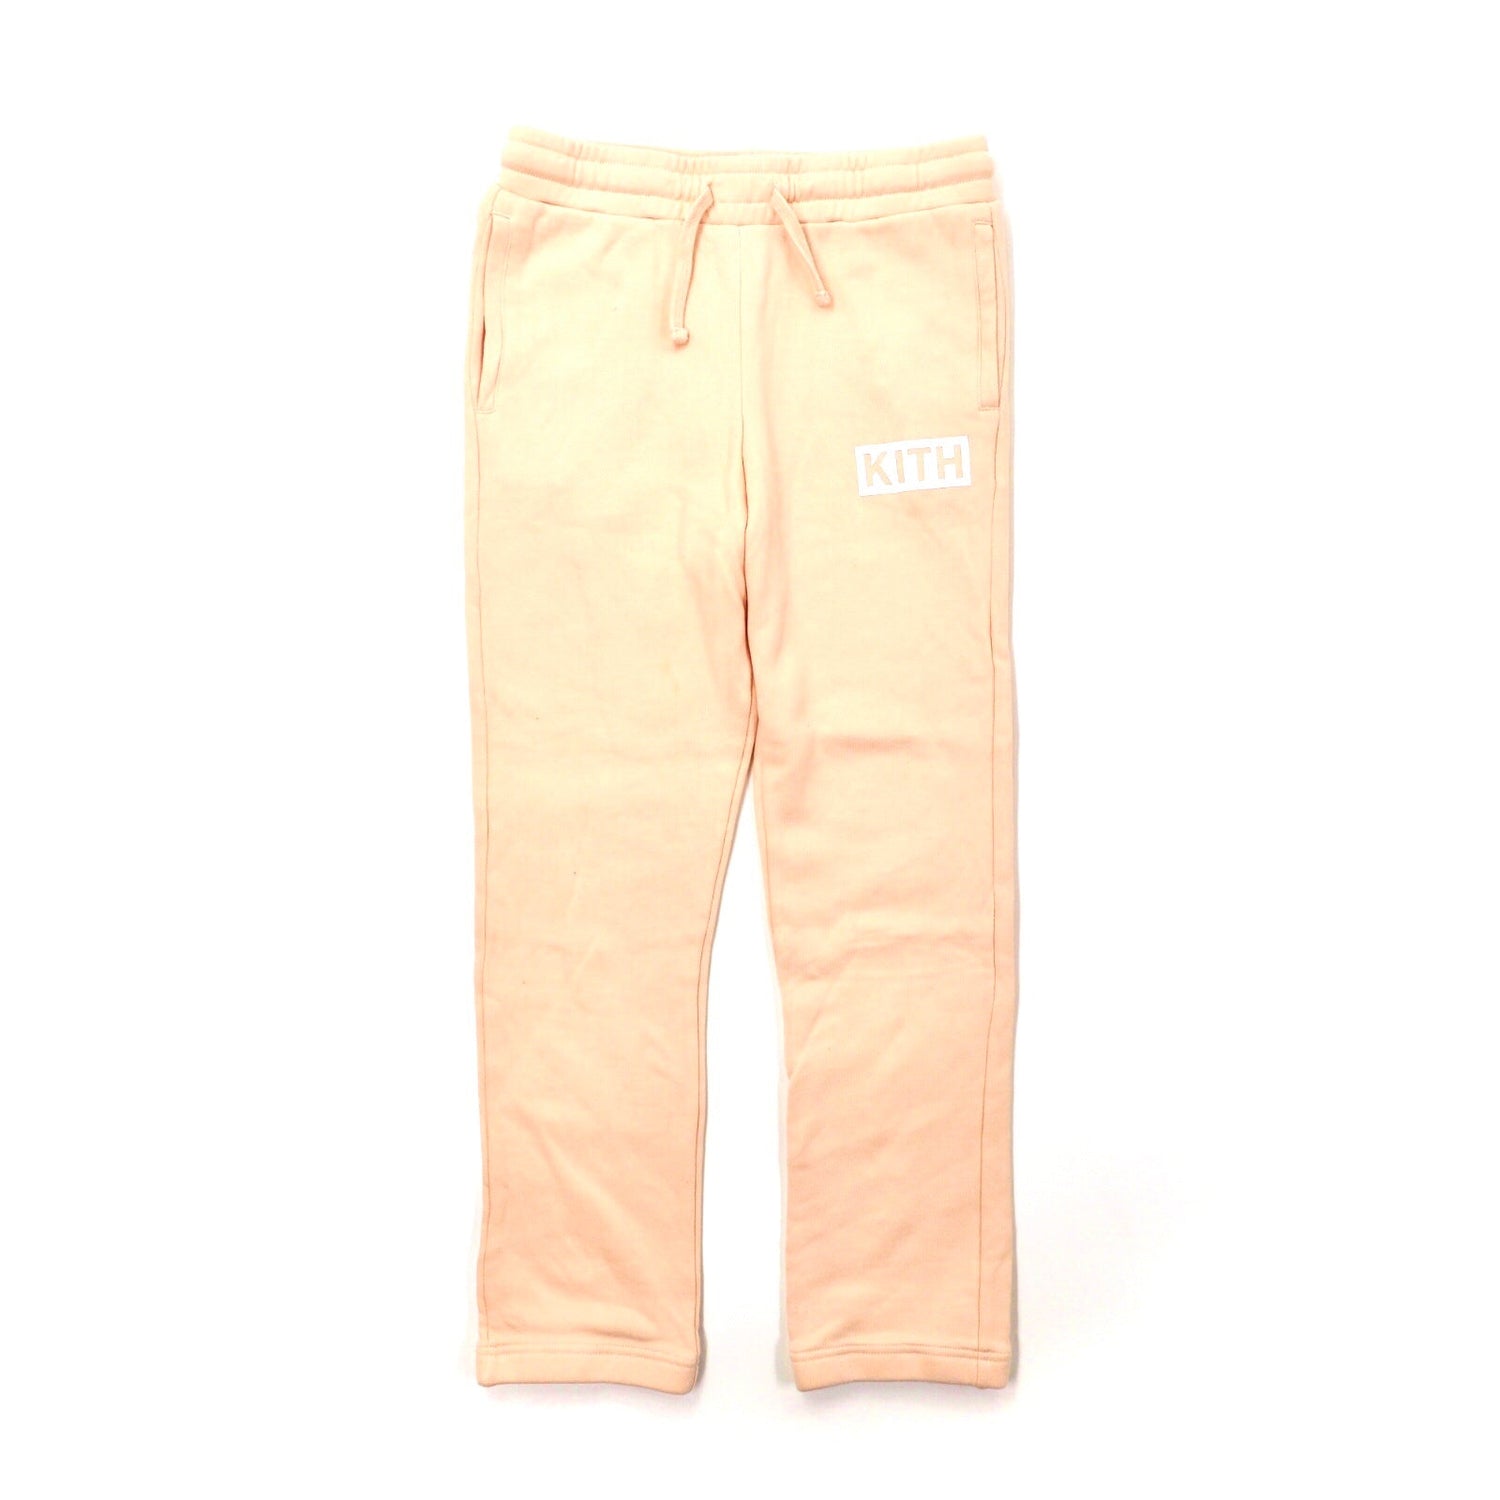 Kith sweat pants 10/11 beige cotton box logo back hair – 日本然リトテ